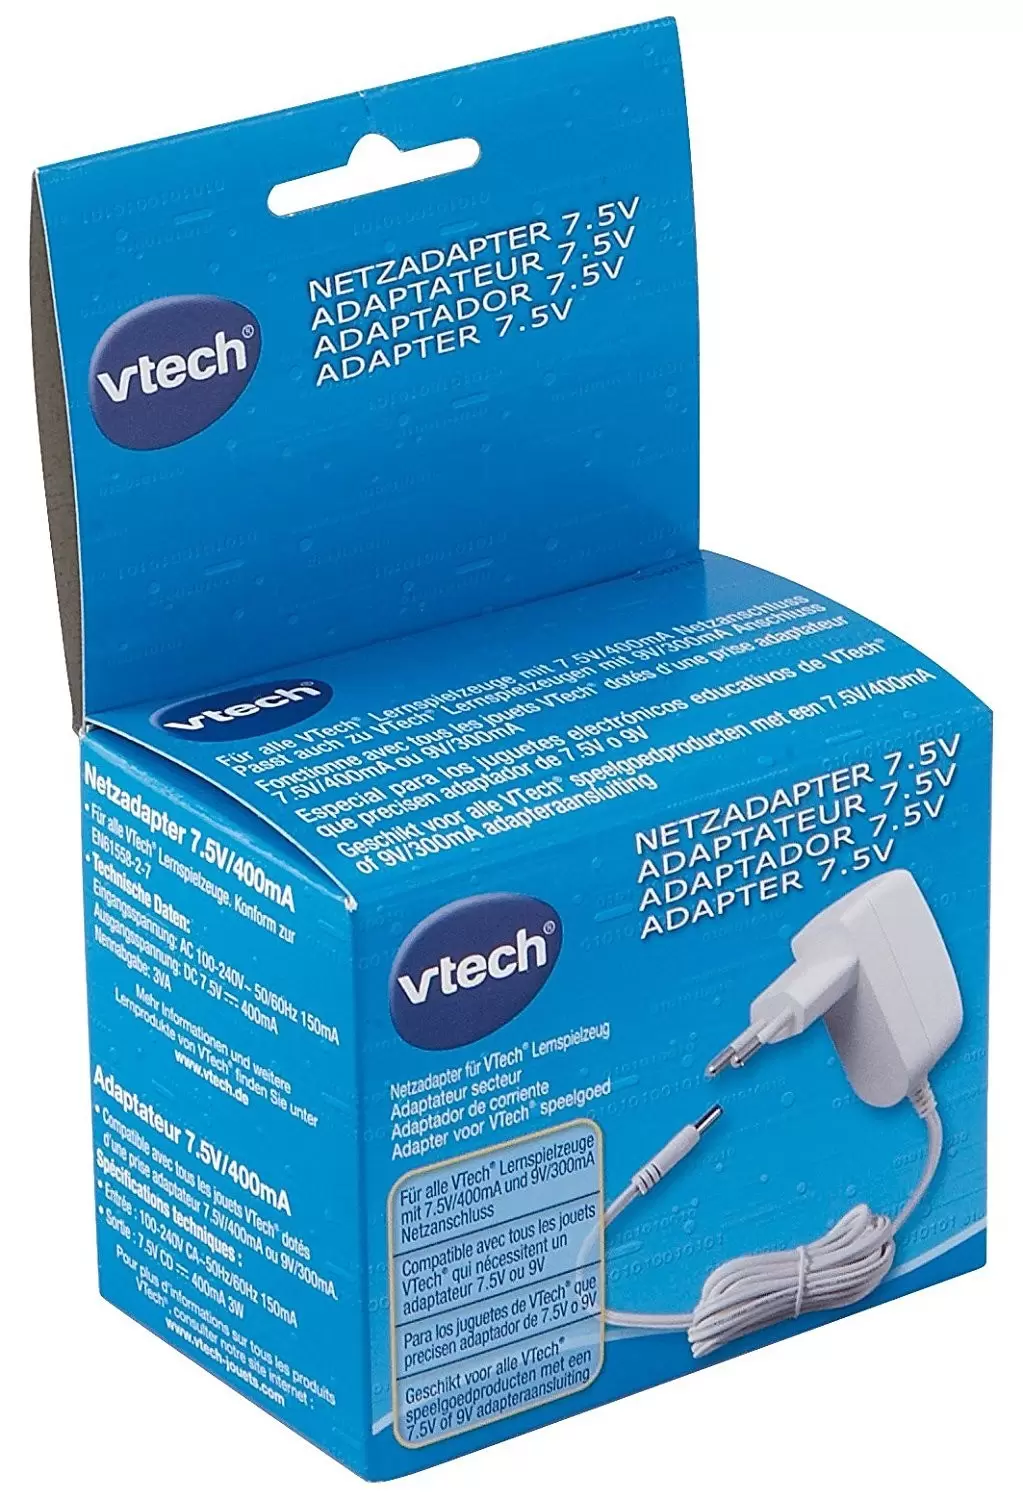 Vtech Stuff - Adaptateur secteur Vtech 7.5V - 9V